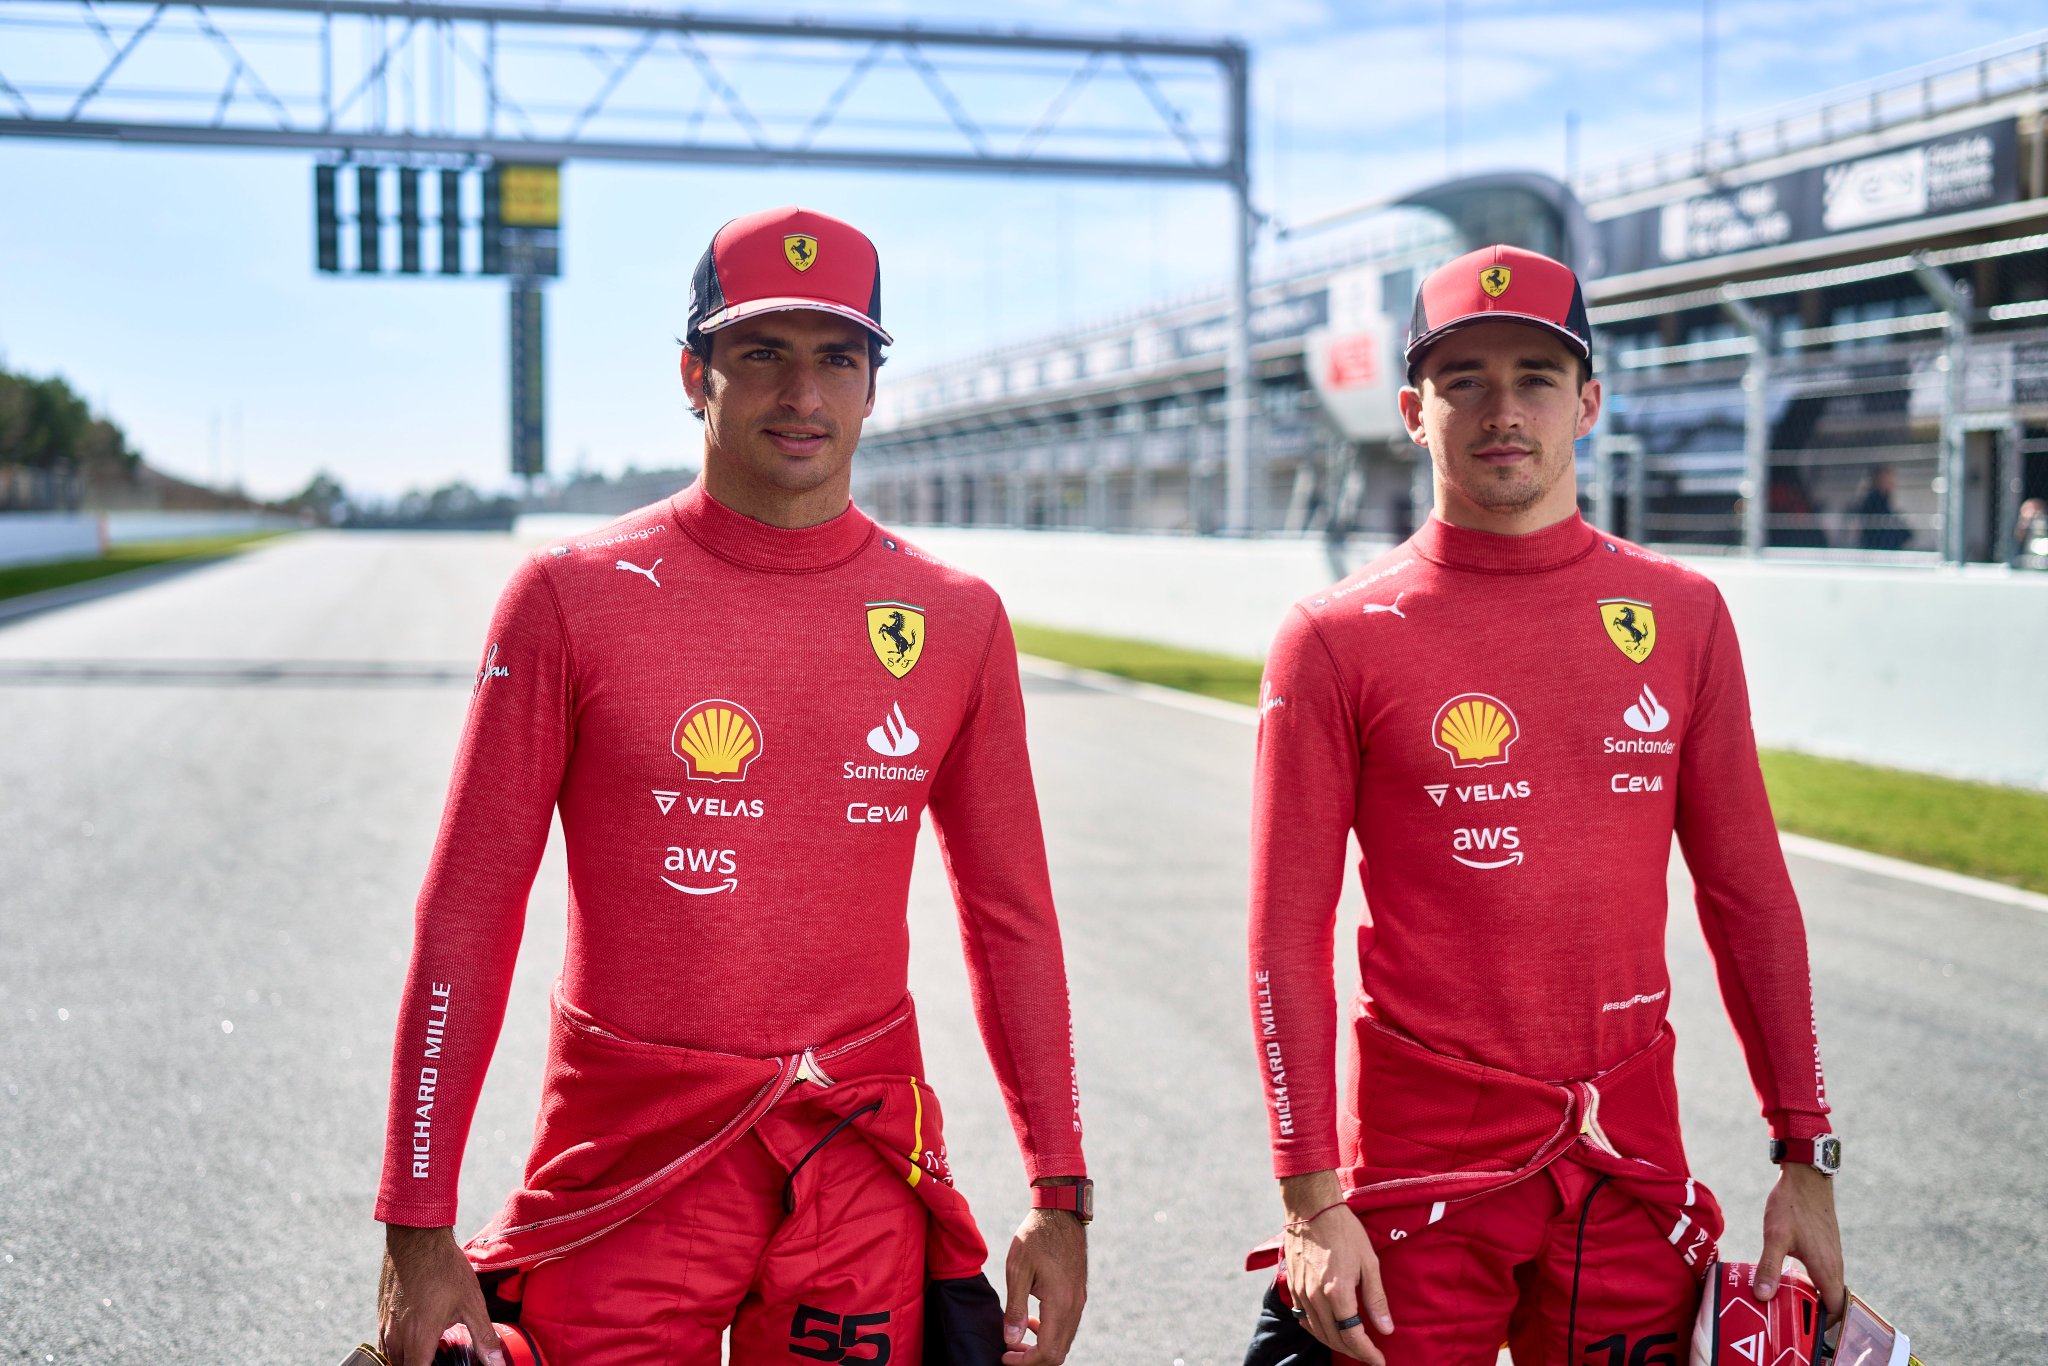 Jarno Trulli interview on Ferrari, Chares Leclerc, Carlos Sainz, 2022  season & more